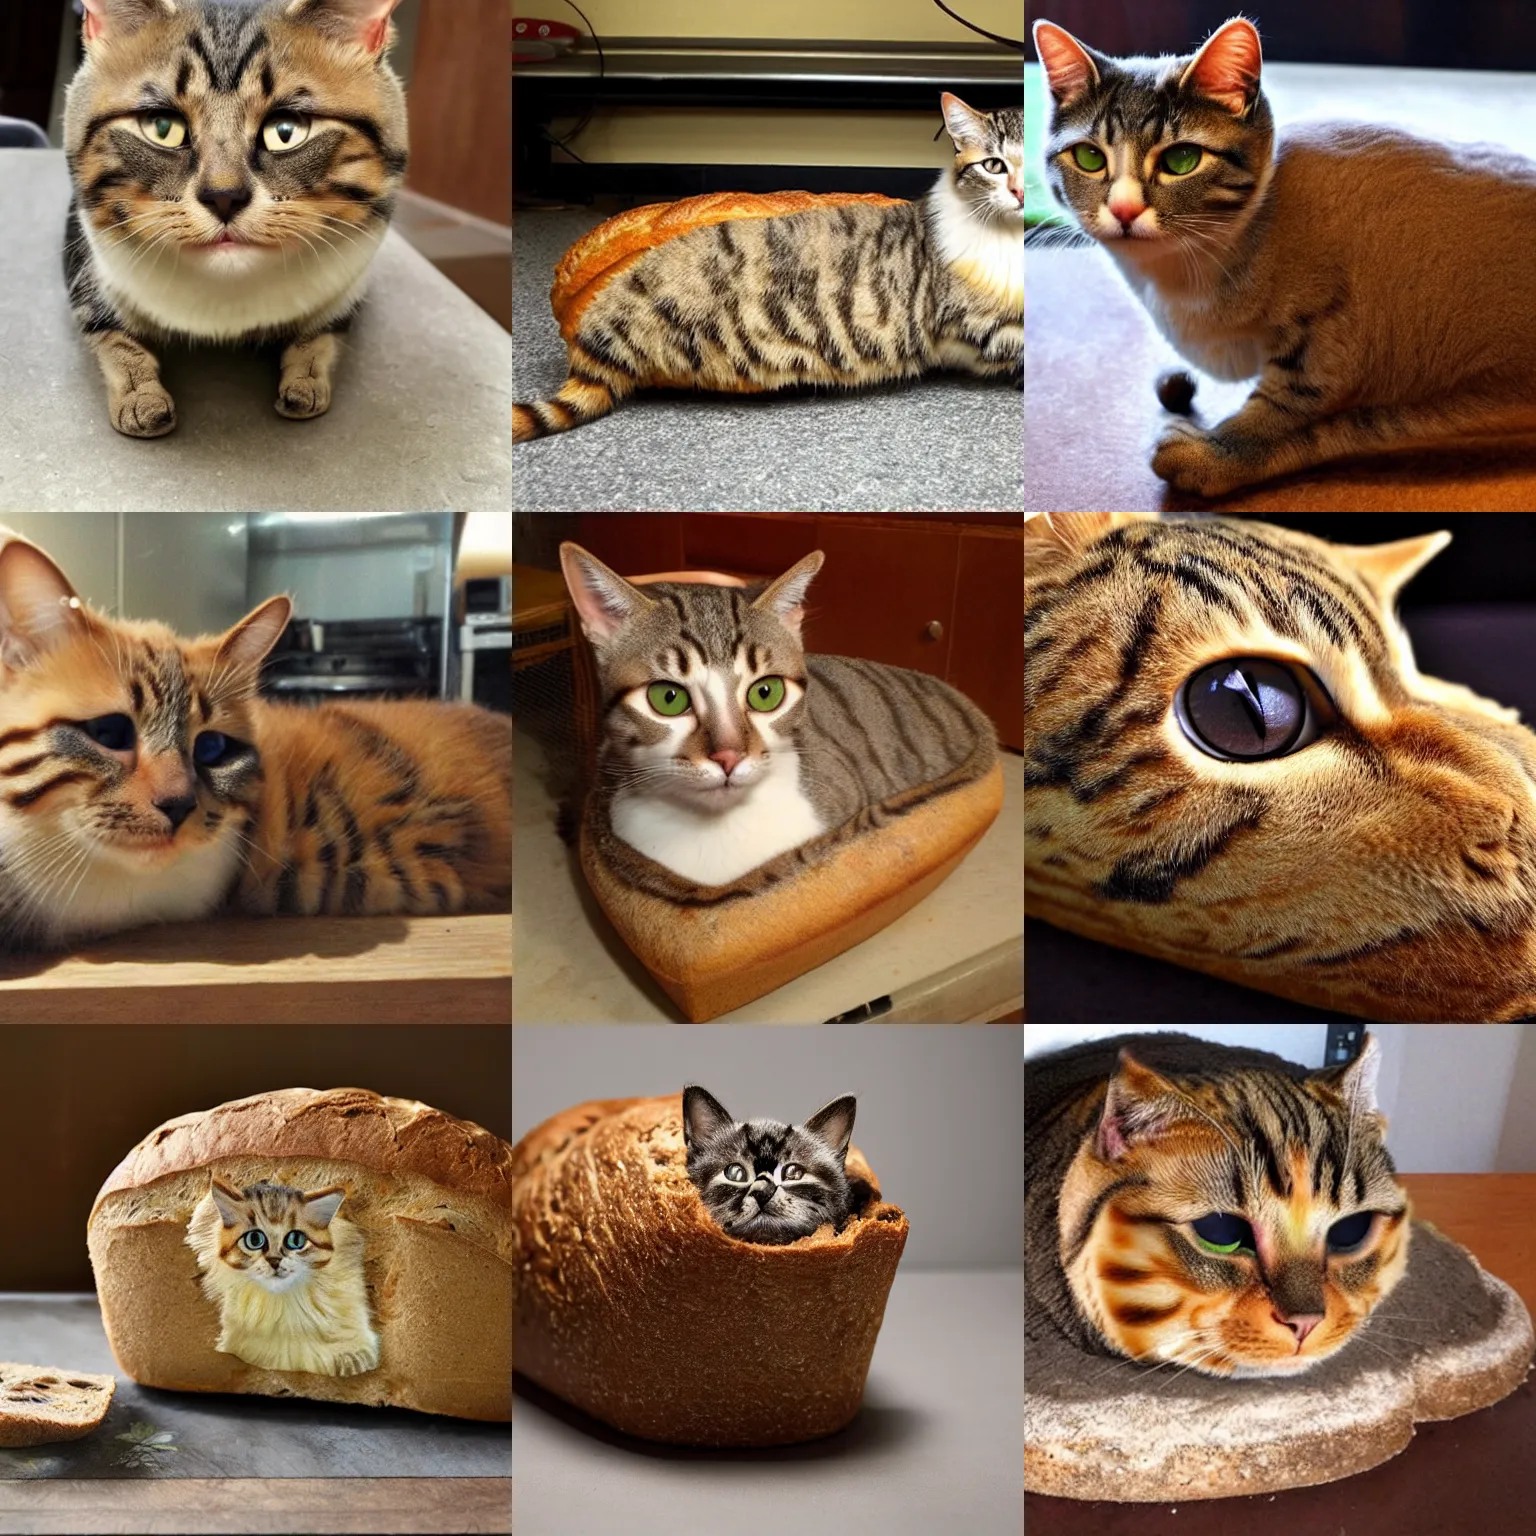 Prompt: a cat breadloaf chimera half bread half cat hybrid